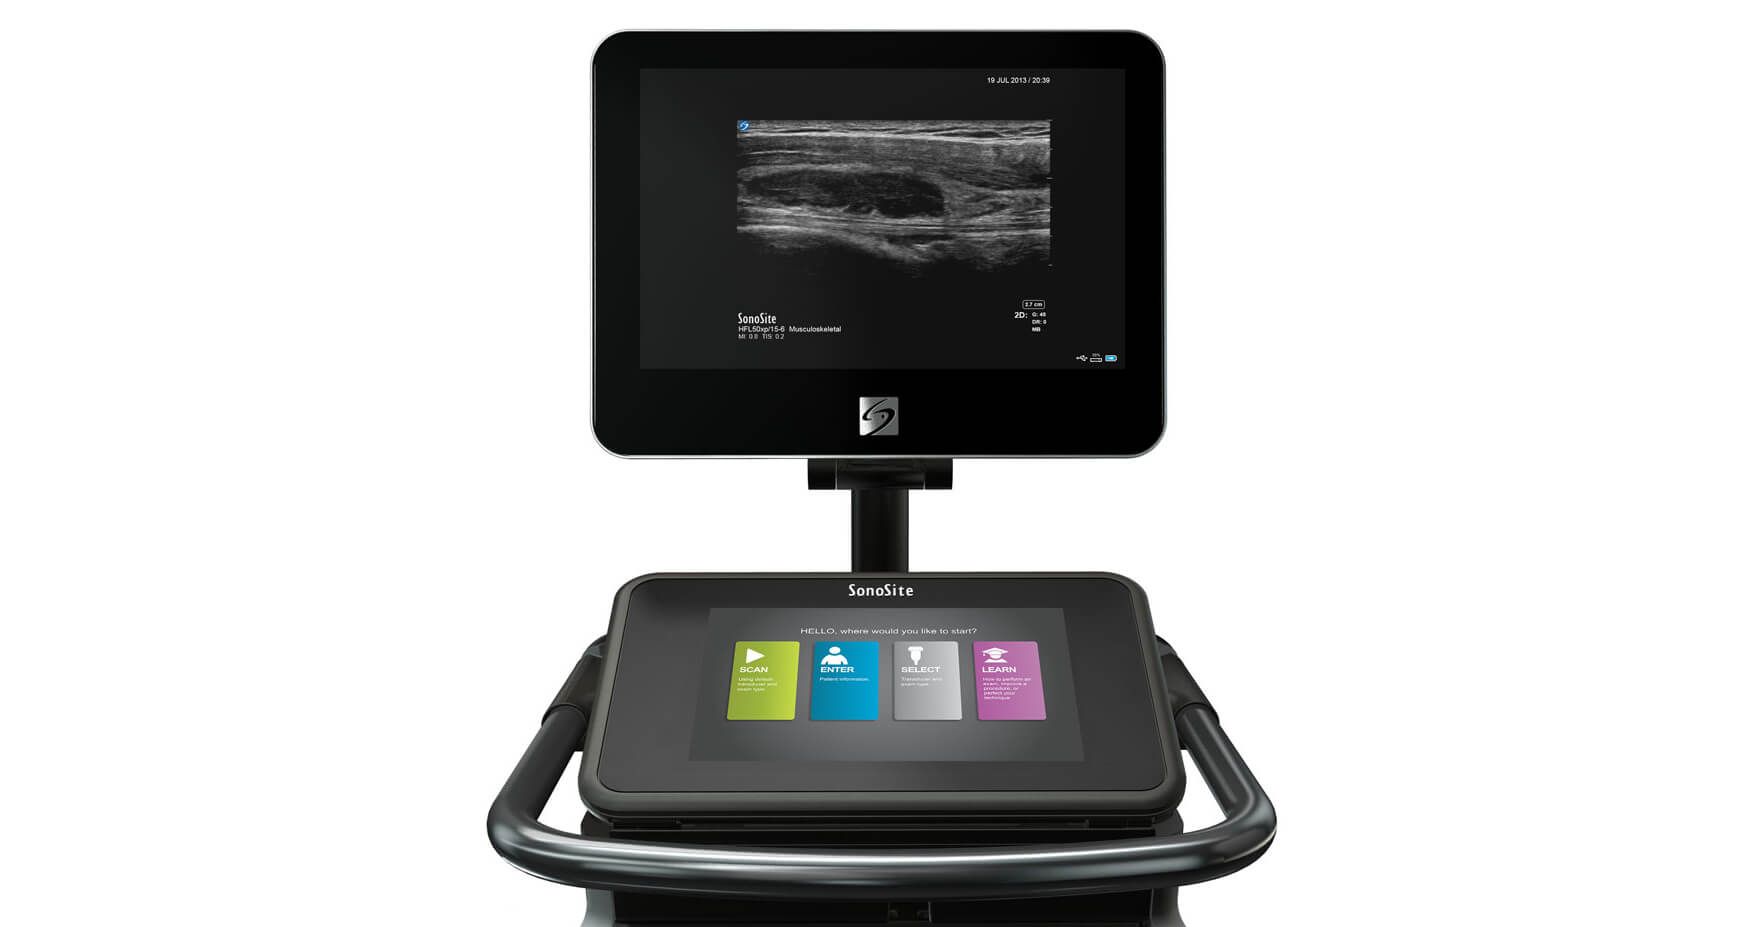 Fujifilm SonoSite объявило о выпуске УЗИ сканера с технологией Point-of-care